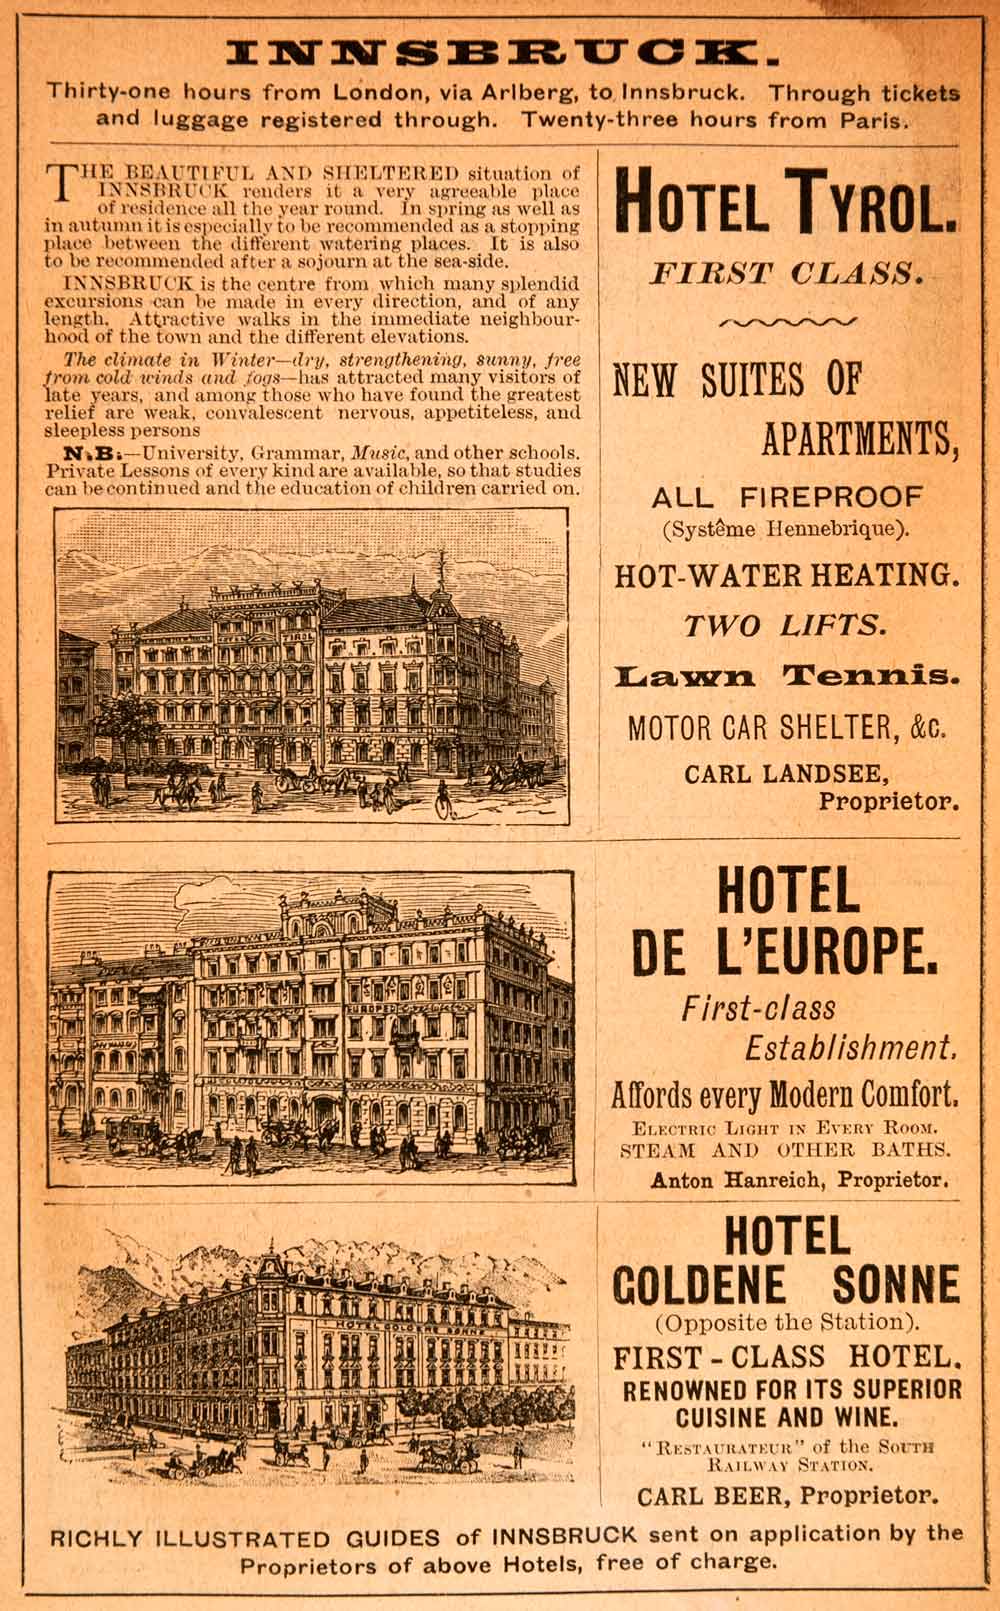 1908 Ad Innsbruck Hotel Tyrol Landsee D'Europe Hanreich Goldene Sonne XGJA5